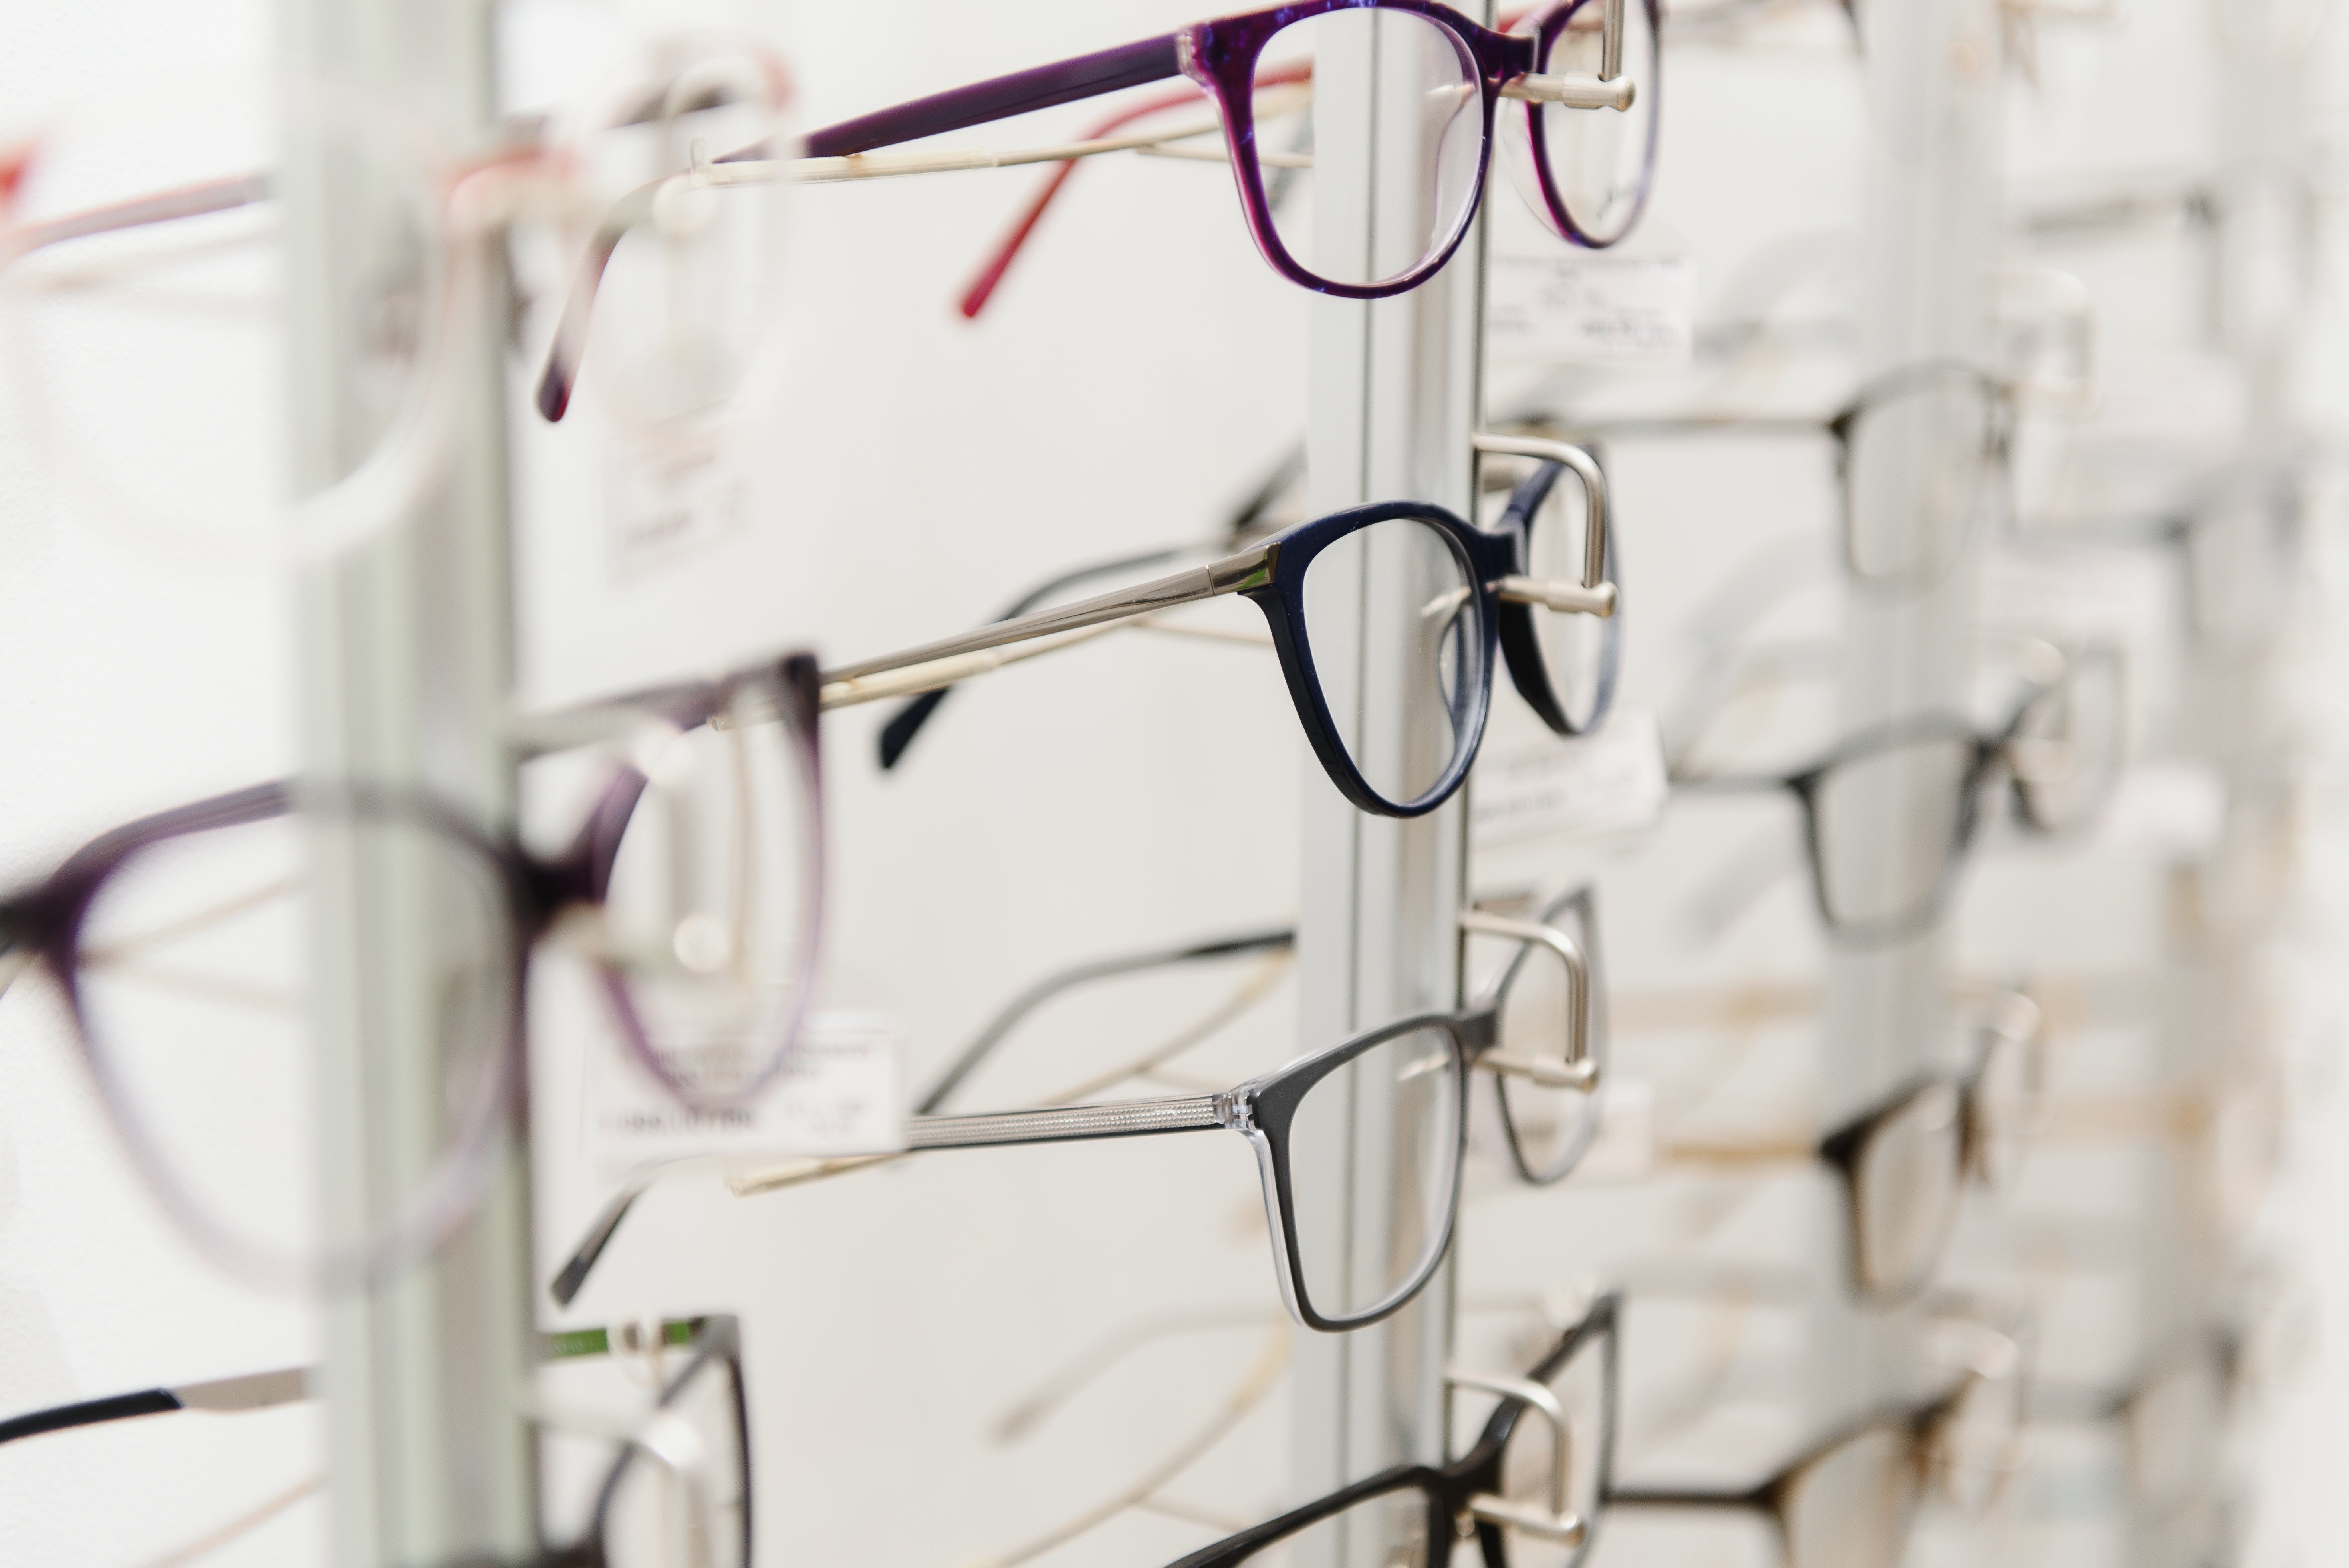 Eyewear retailer should have taken a closer look at their marketing settings